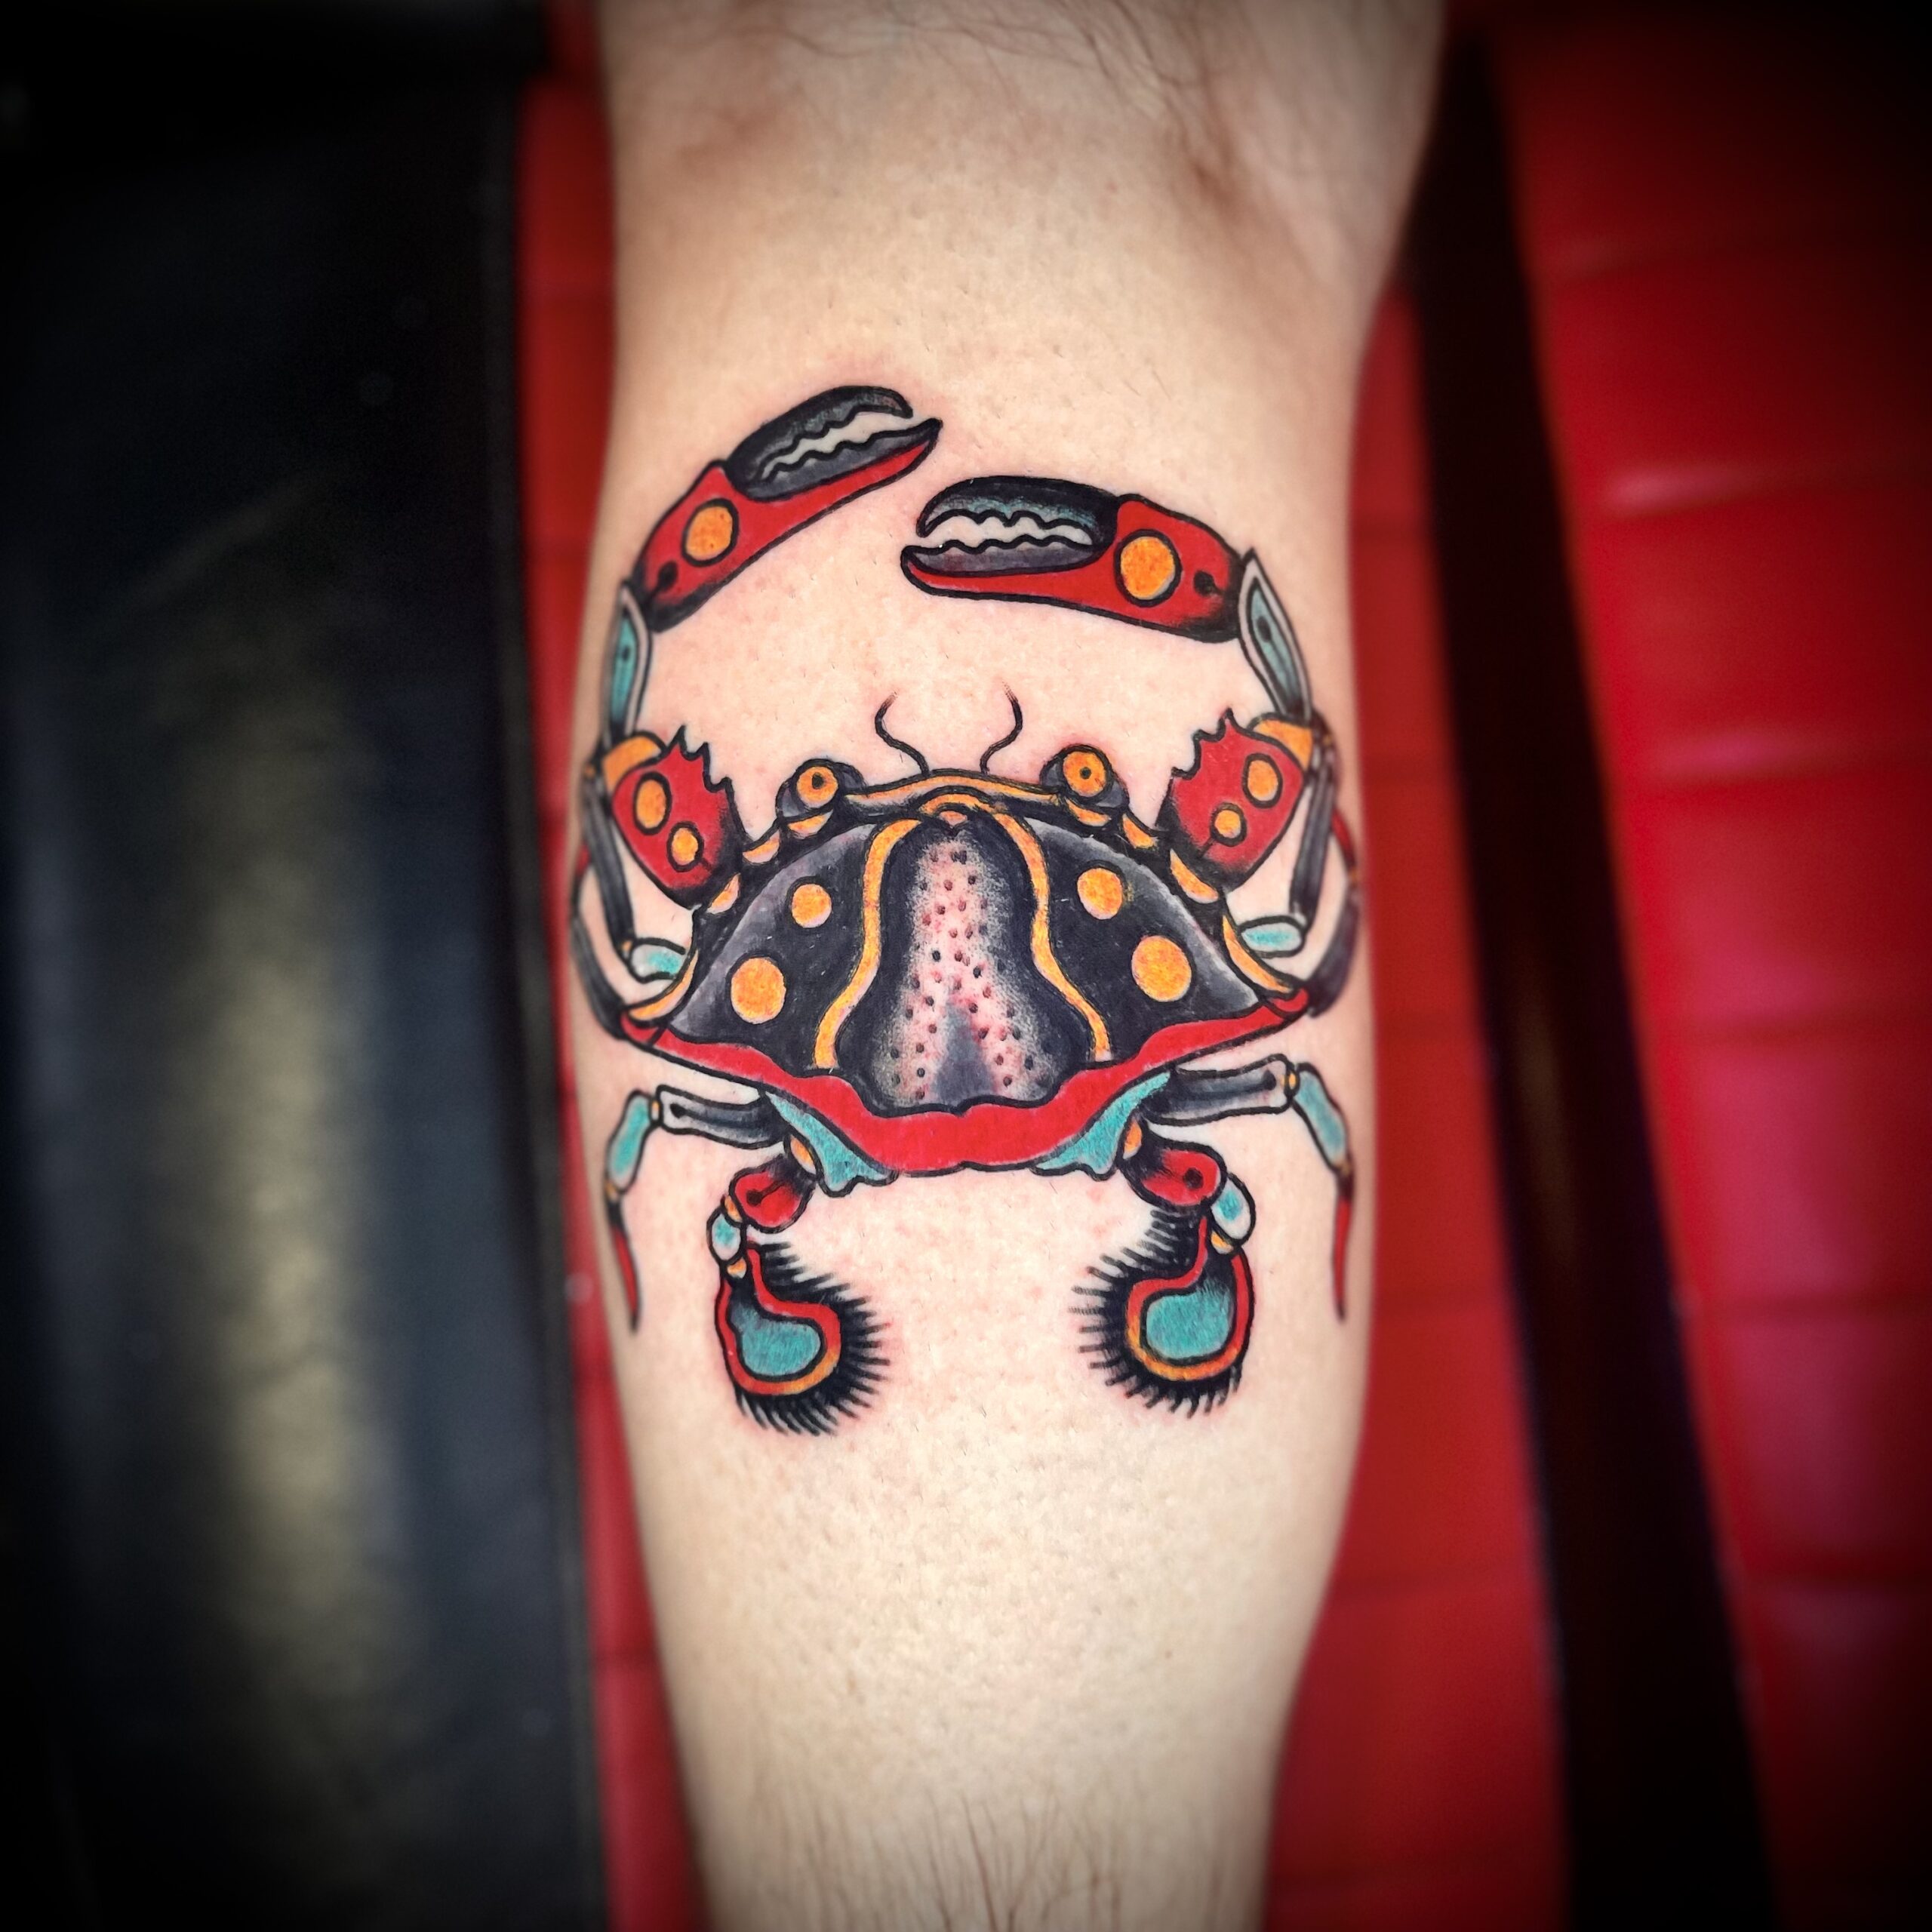 Tattoo of a crab from top Dallas tattoo artist